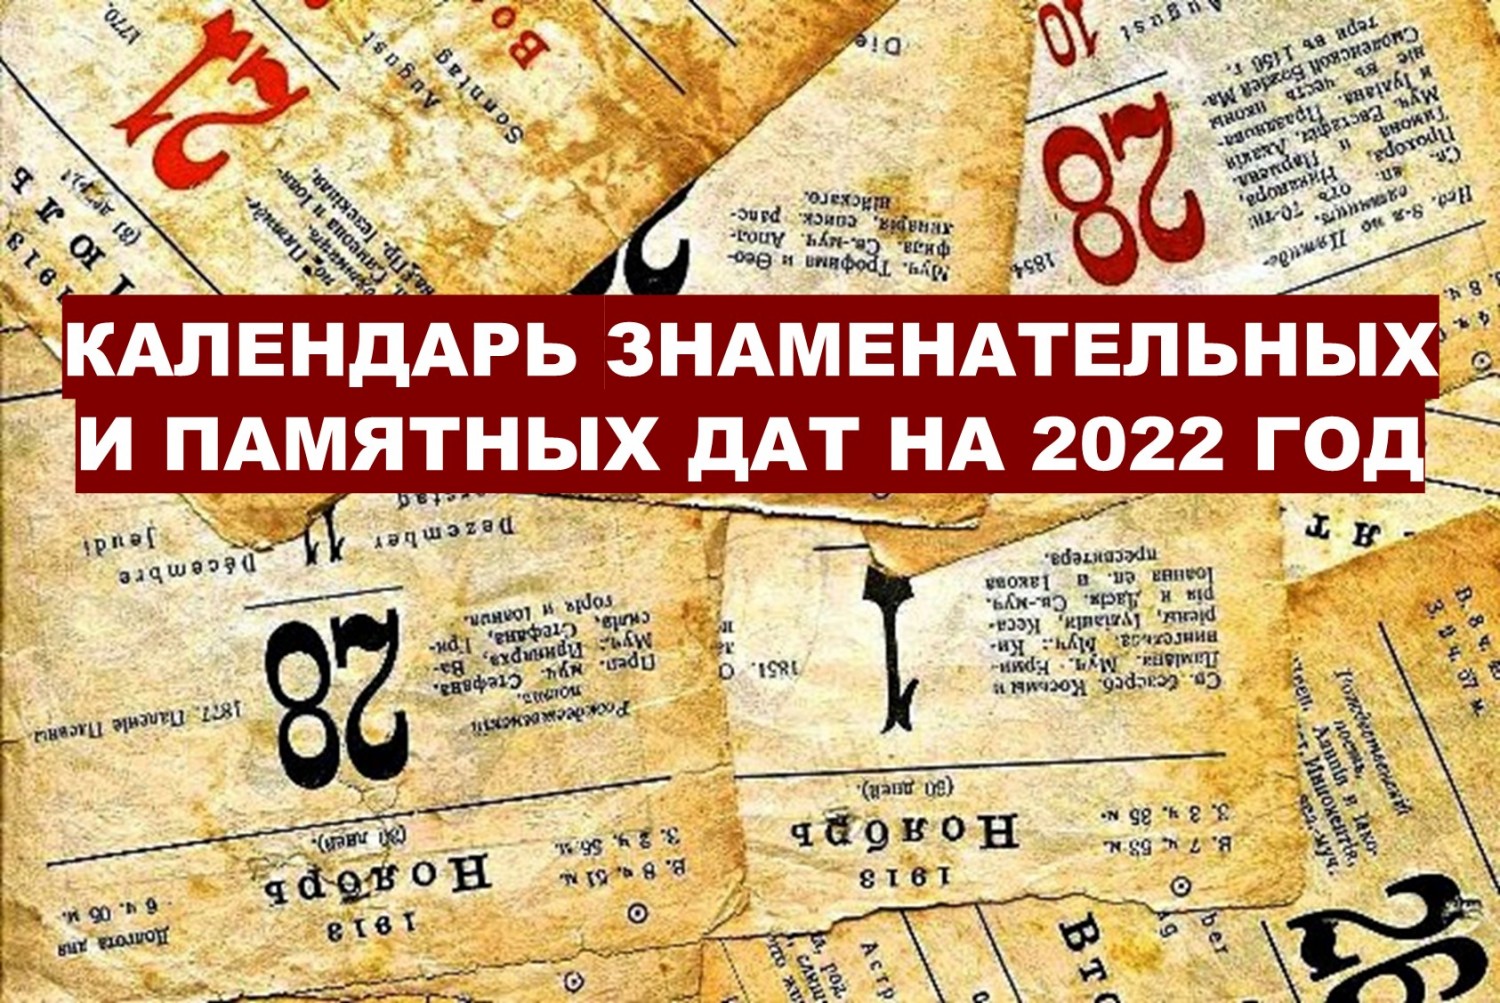 Календарь дат 2022. Календарь знаменательных дат на 2022 год. Знаменательные даты 2022 года. Календарь знаменательных и памятных дат на 2022 год. Картинка календарь знаменательных дат.